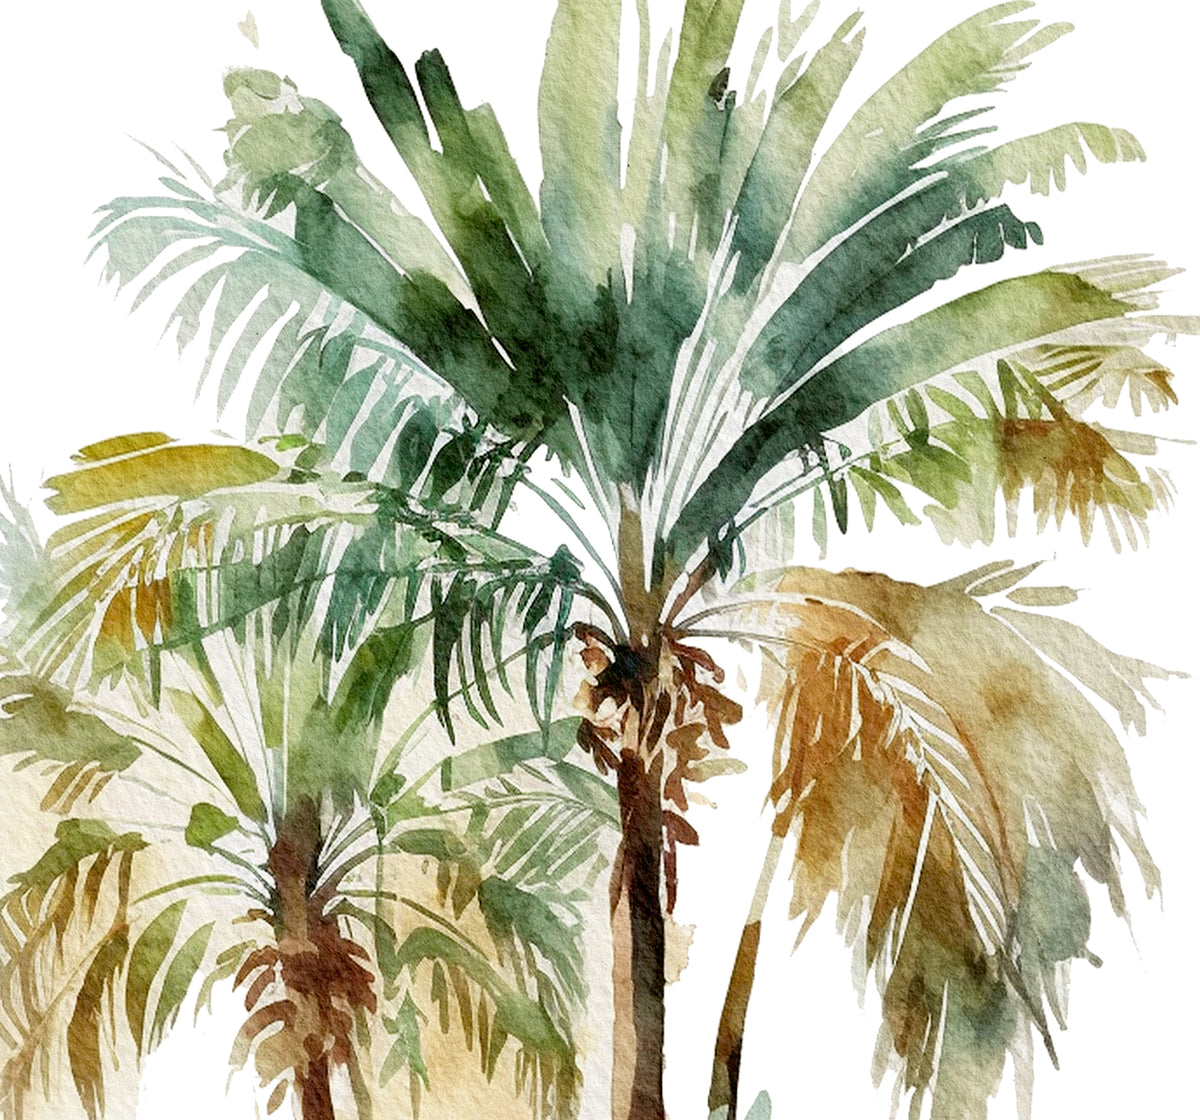 Palm Tree Wall Prints